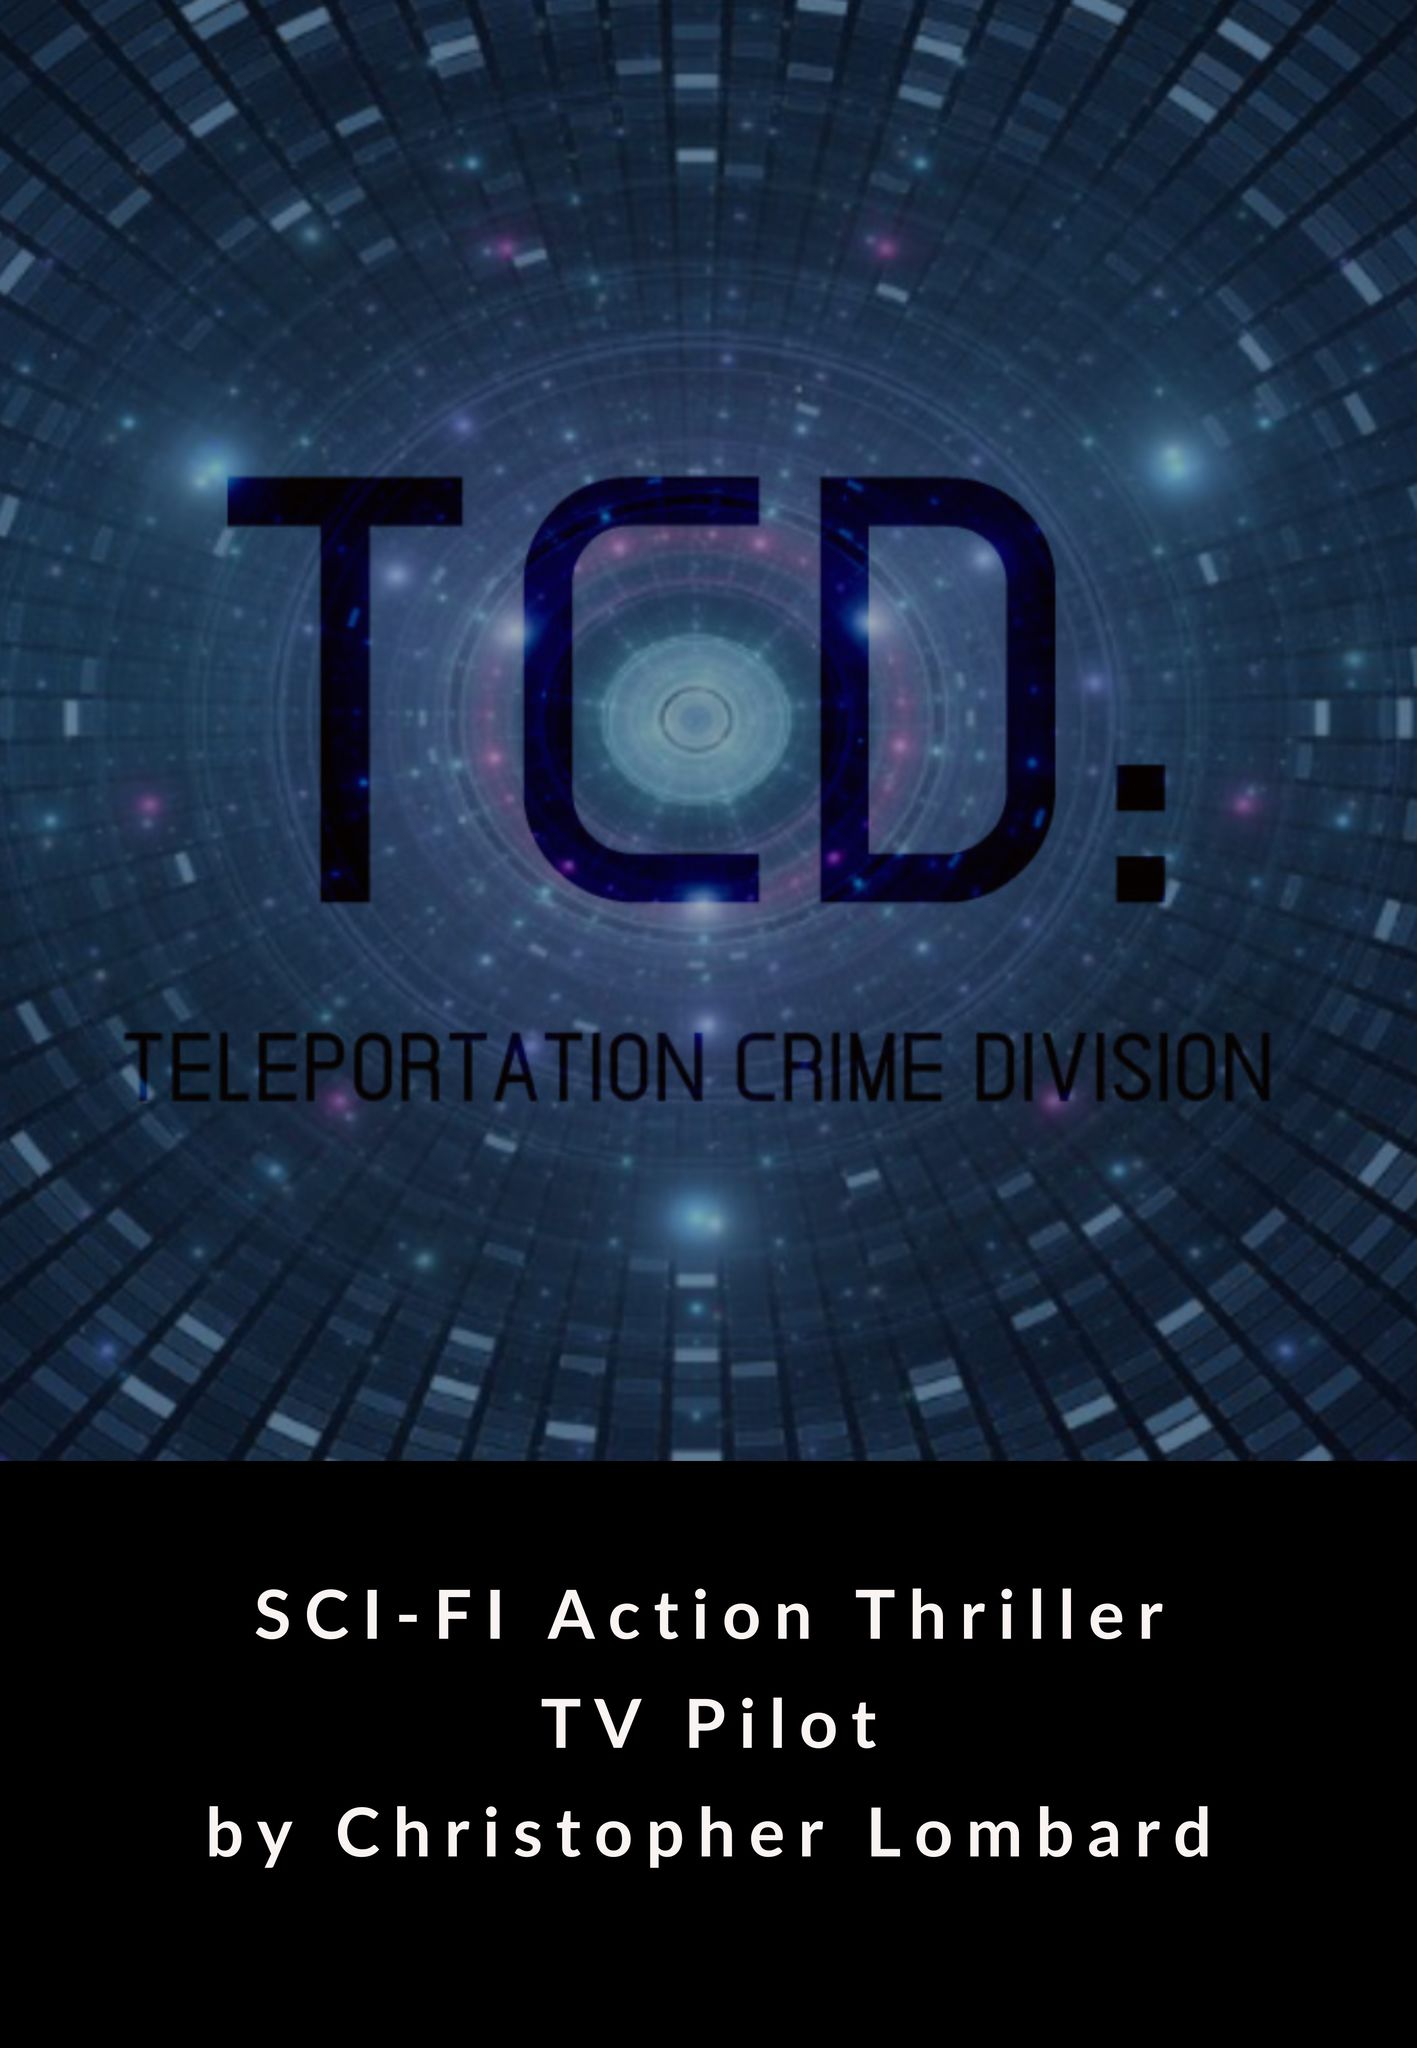 TCD: TELEPORTATION CRIME DIVISION